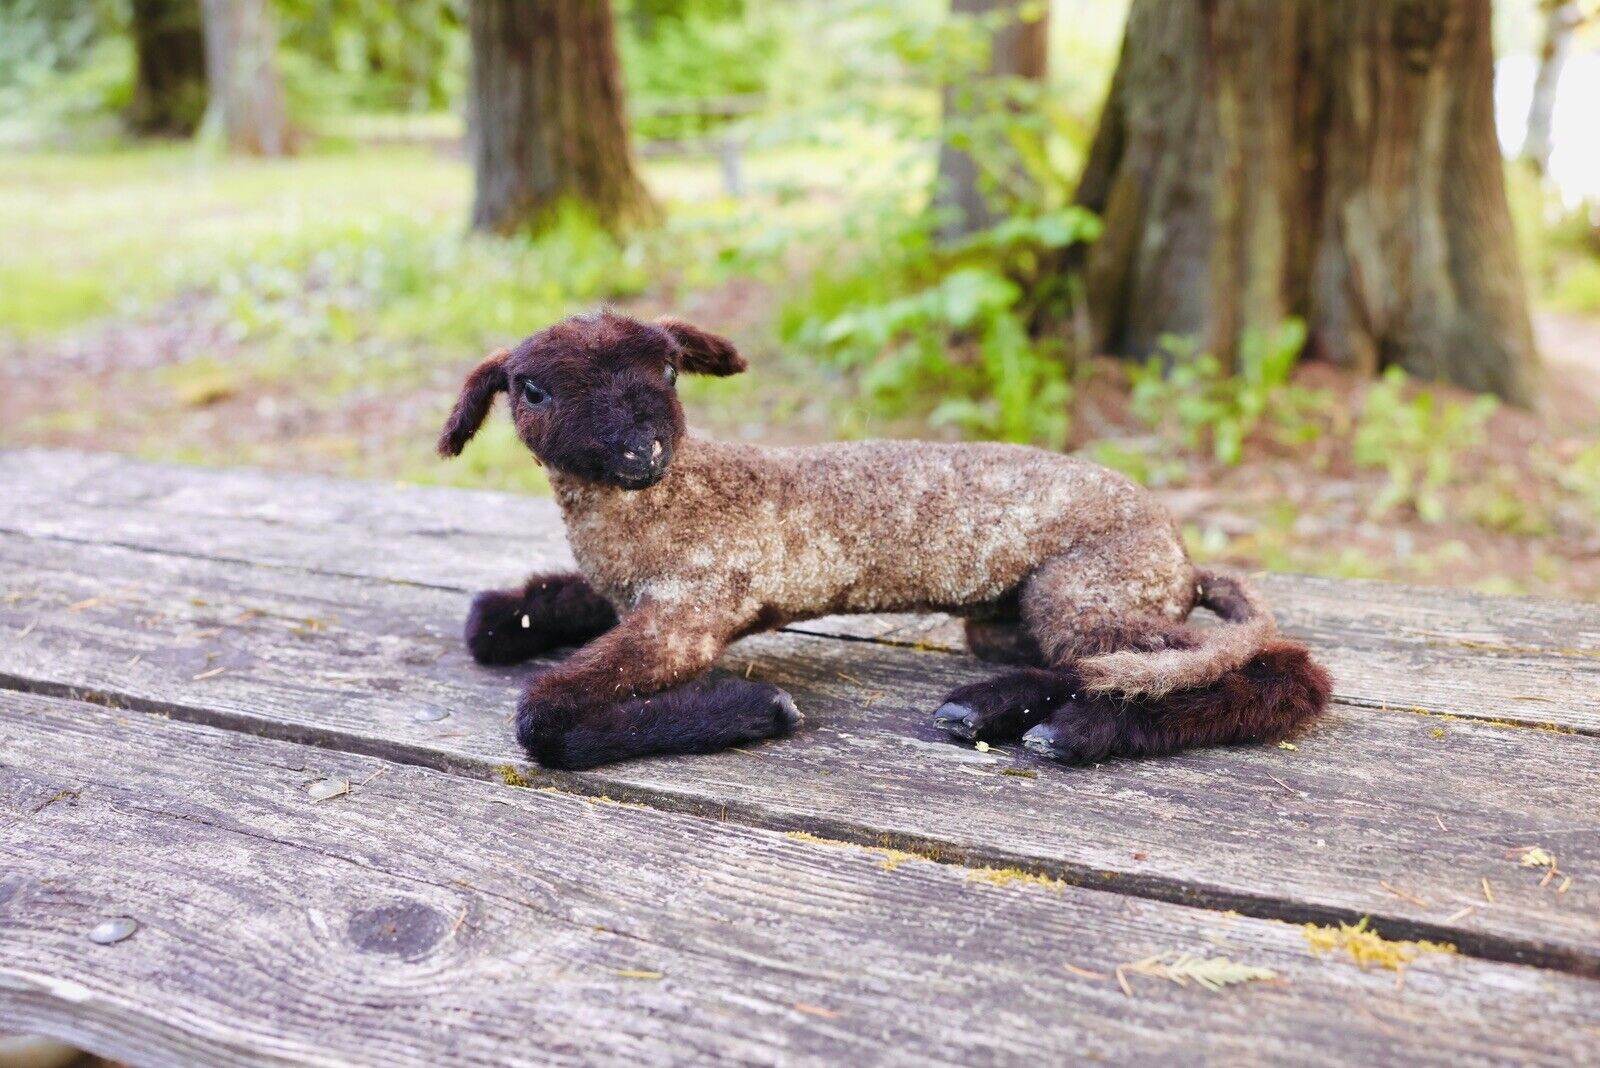 Beautiful black Baby Lamb, full body New Mount Decor Taxidermy